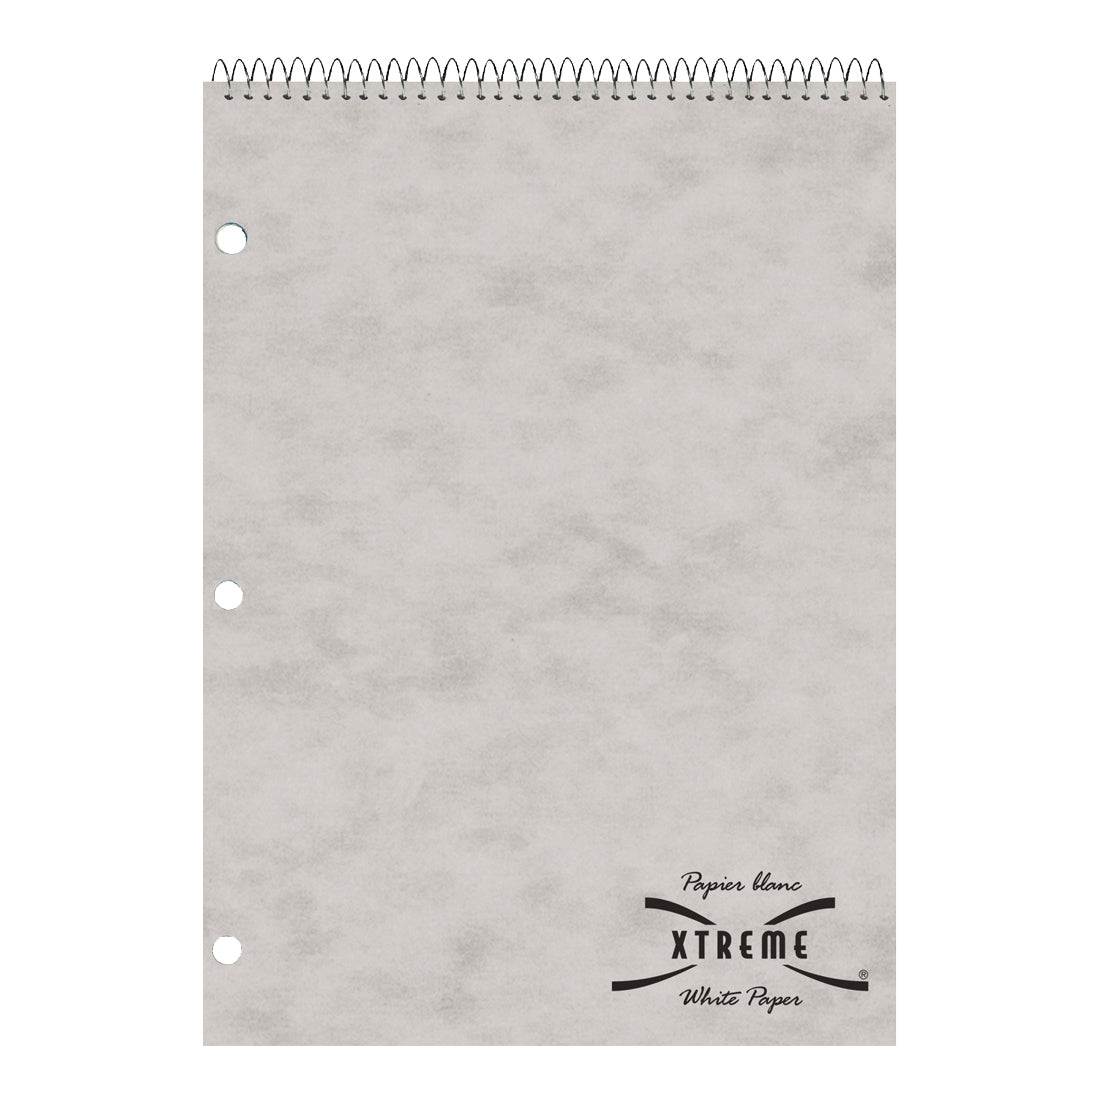 Xtreme White Porta-Desk Notebook